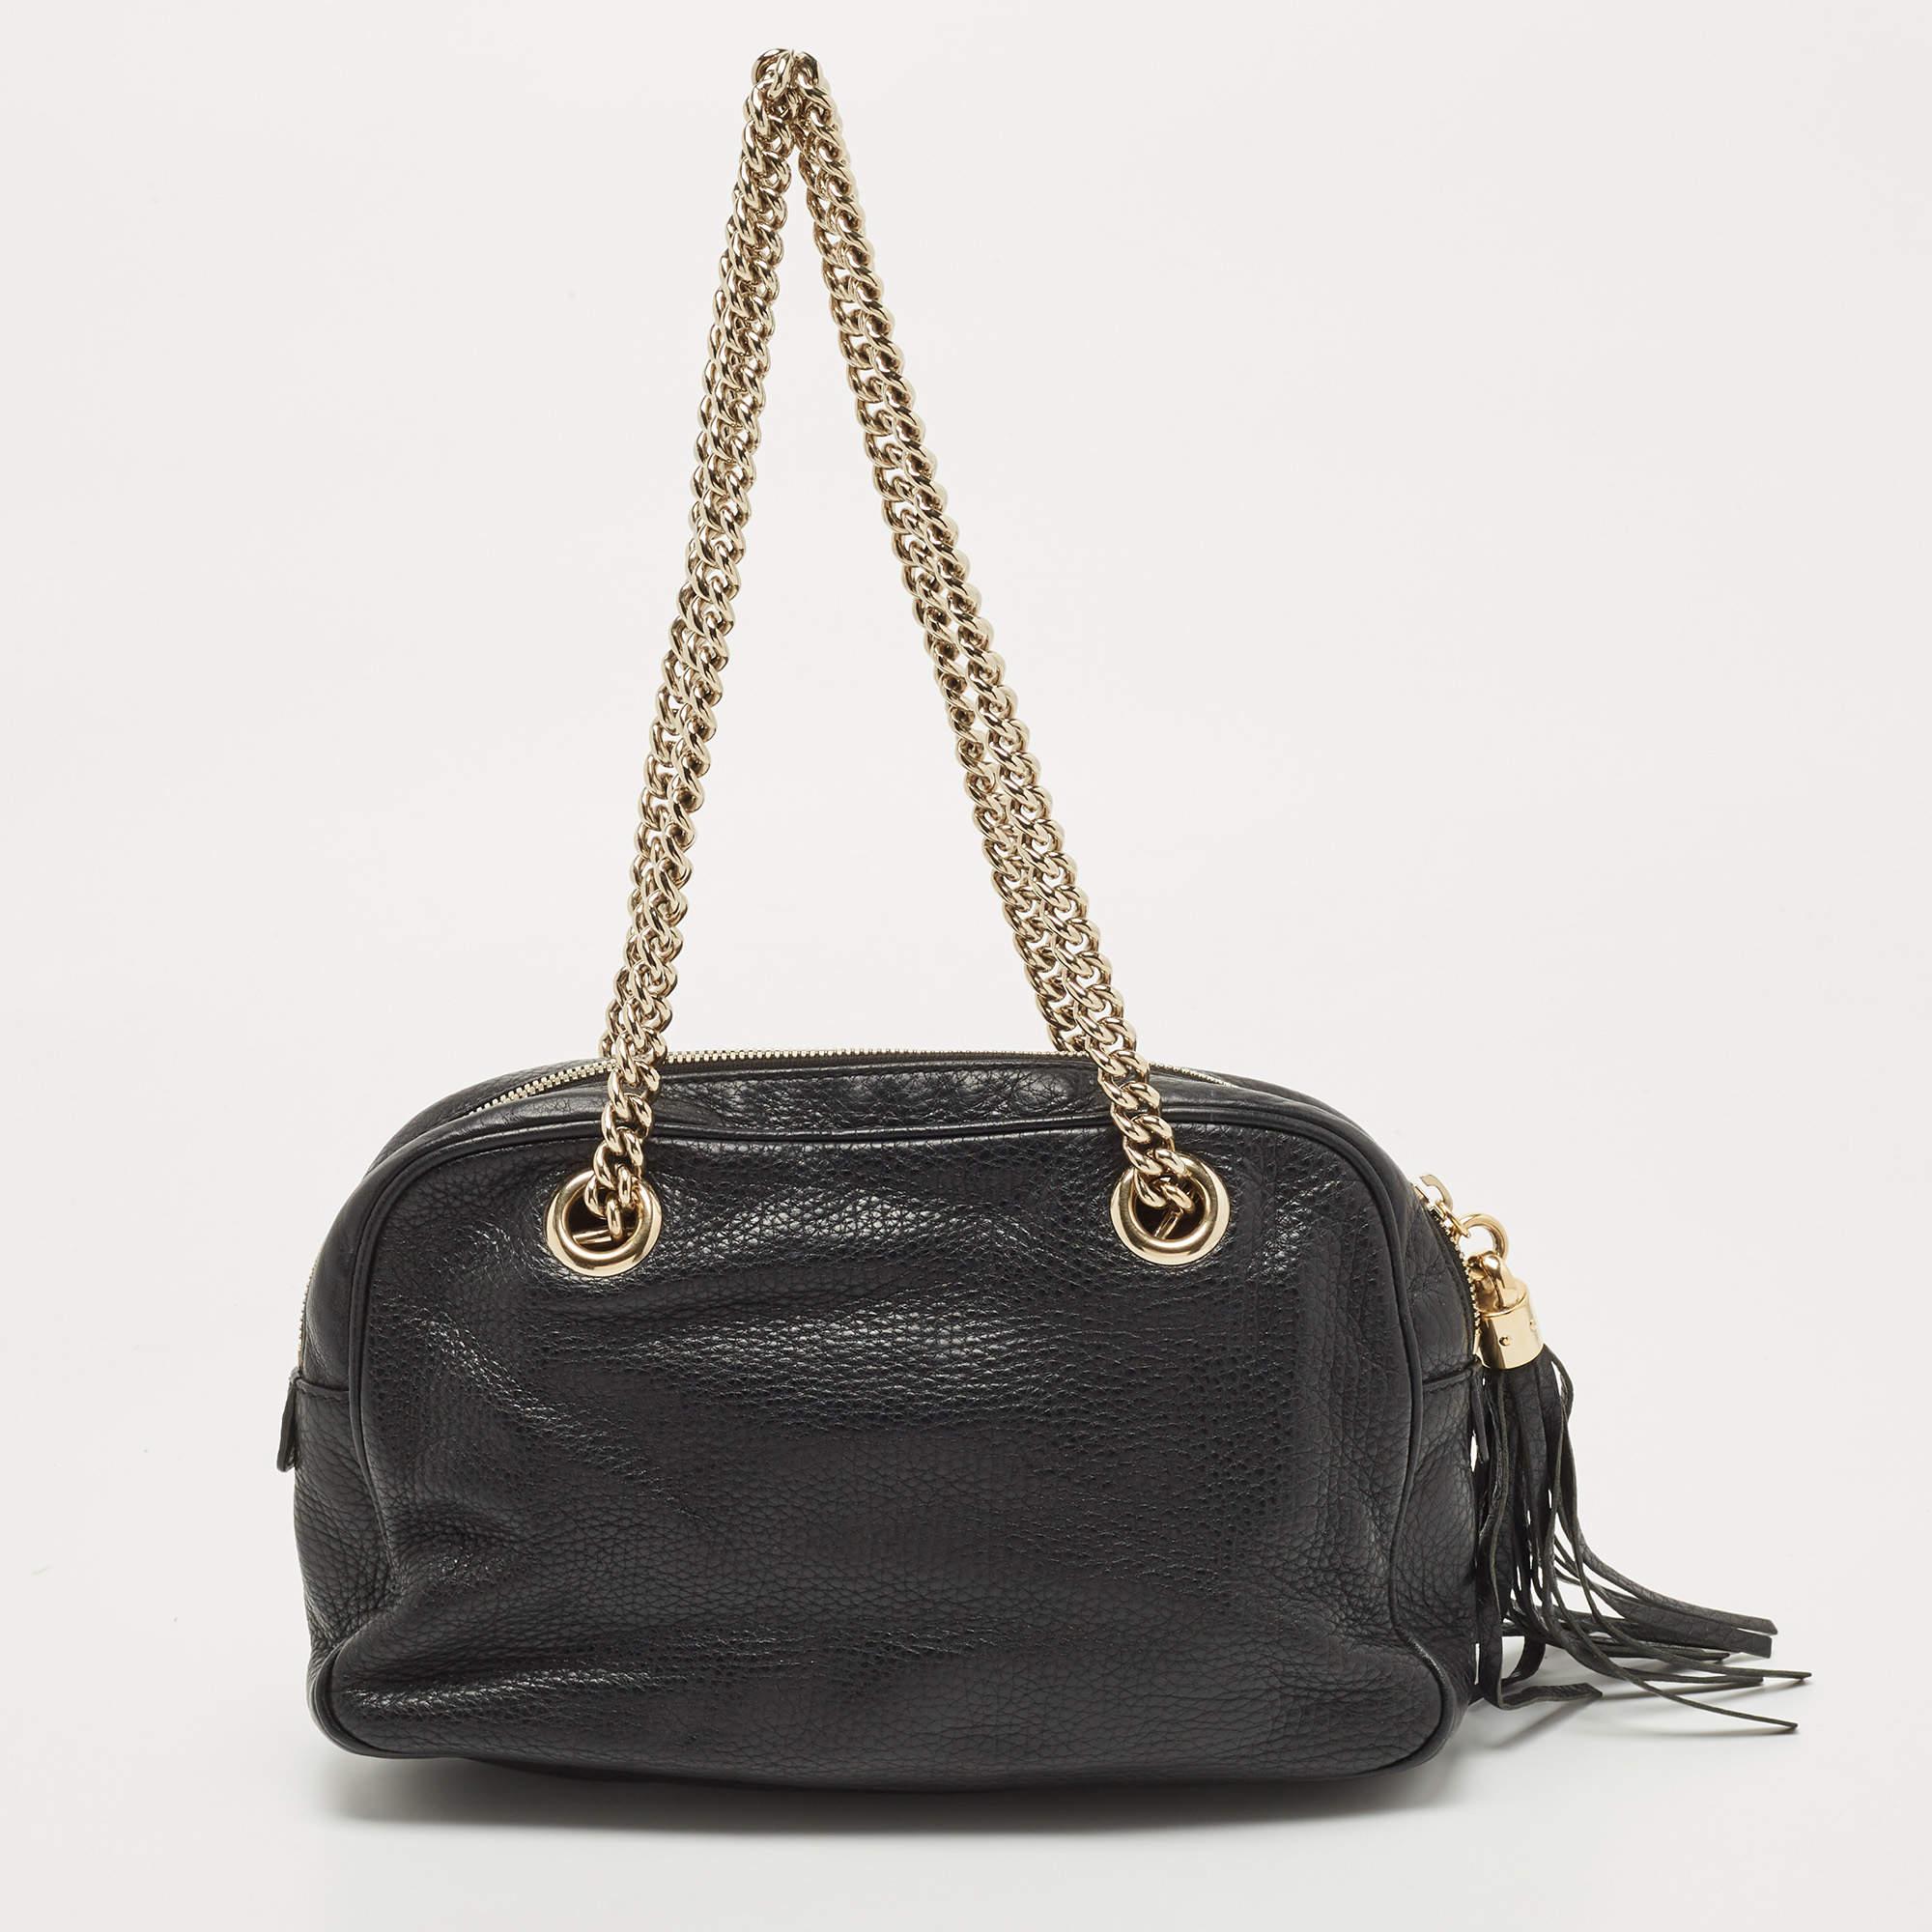 Gucci Black Leather Medium Soho Chain Shoulder Bag 7